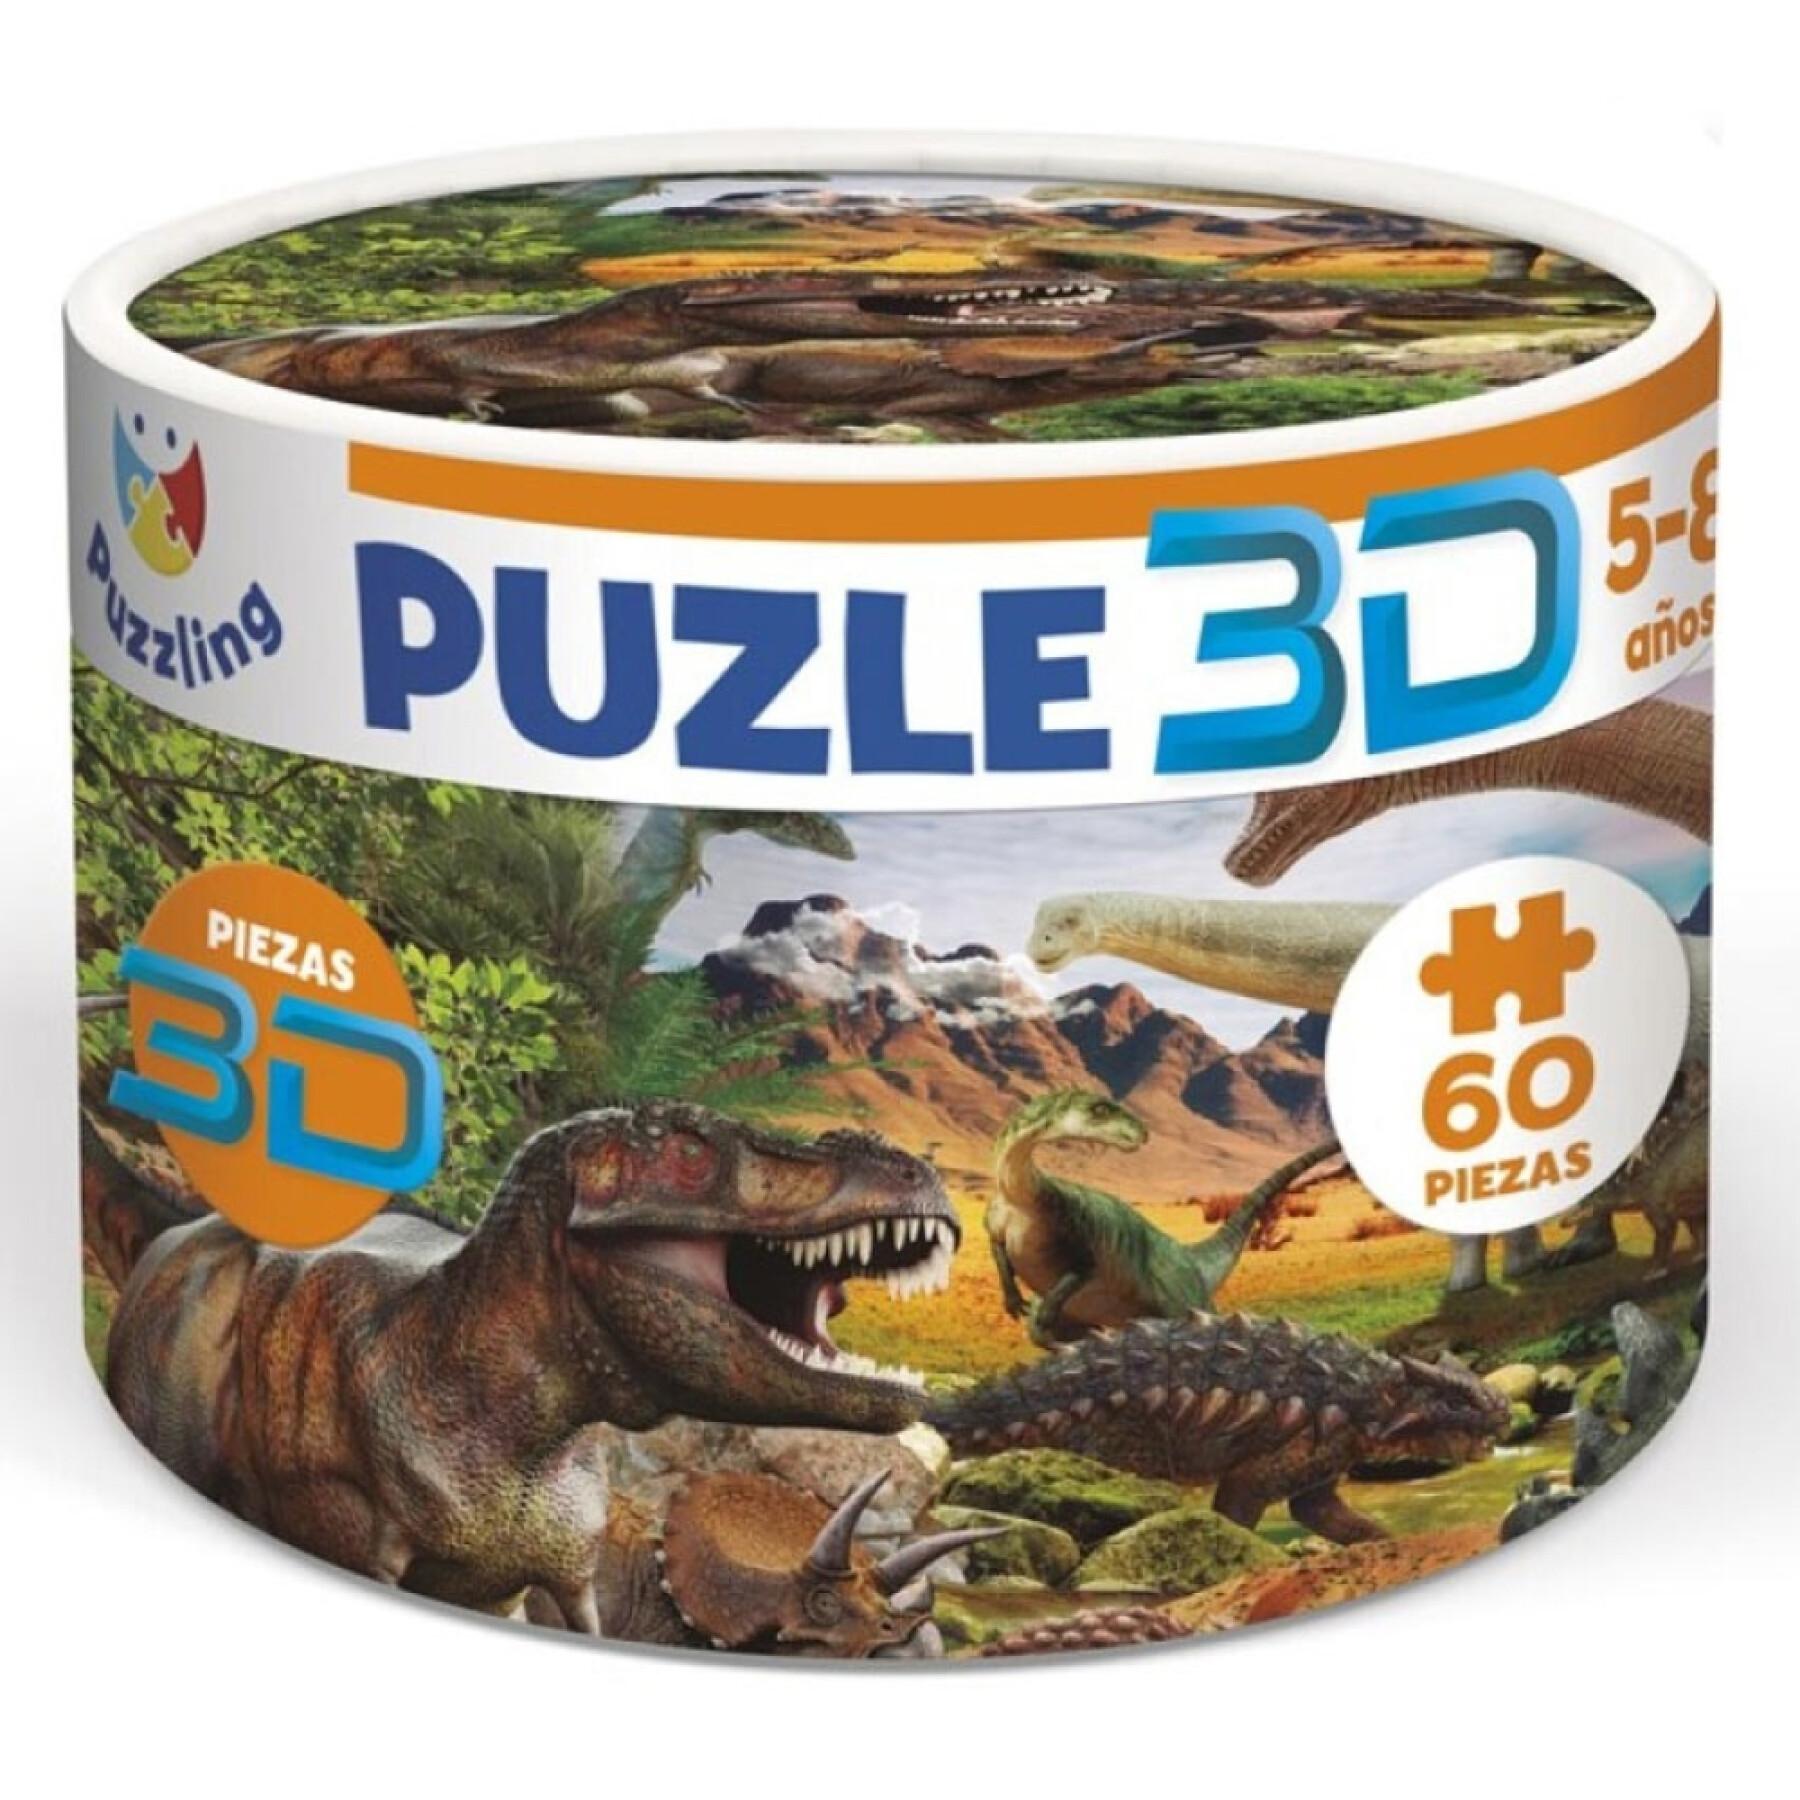 Puzzle 3d de 60 piezas Puzzling Lenticular Dinosaurios